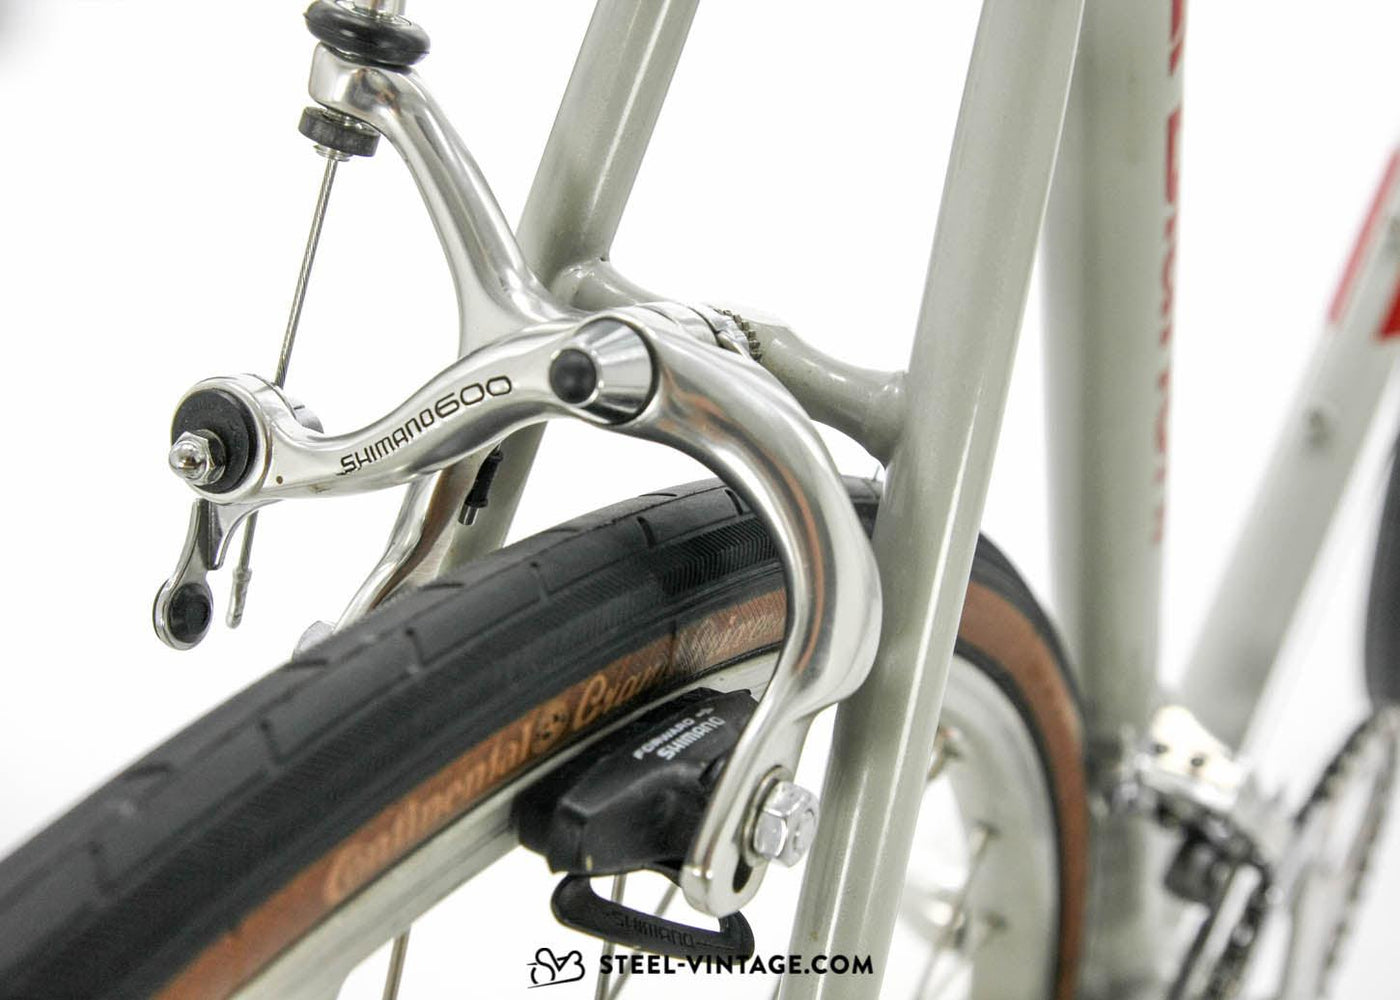 Bianchi Rekord 910 Classic Road Bike 1980s - Steel Vintage Bikes